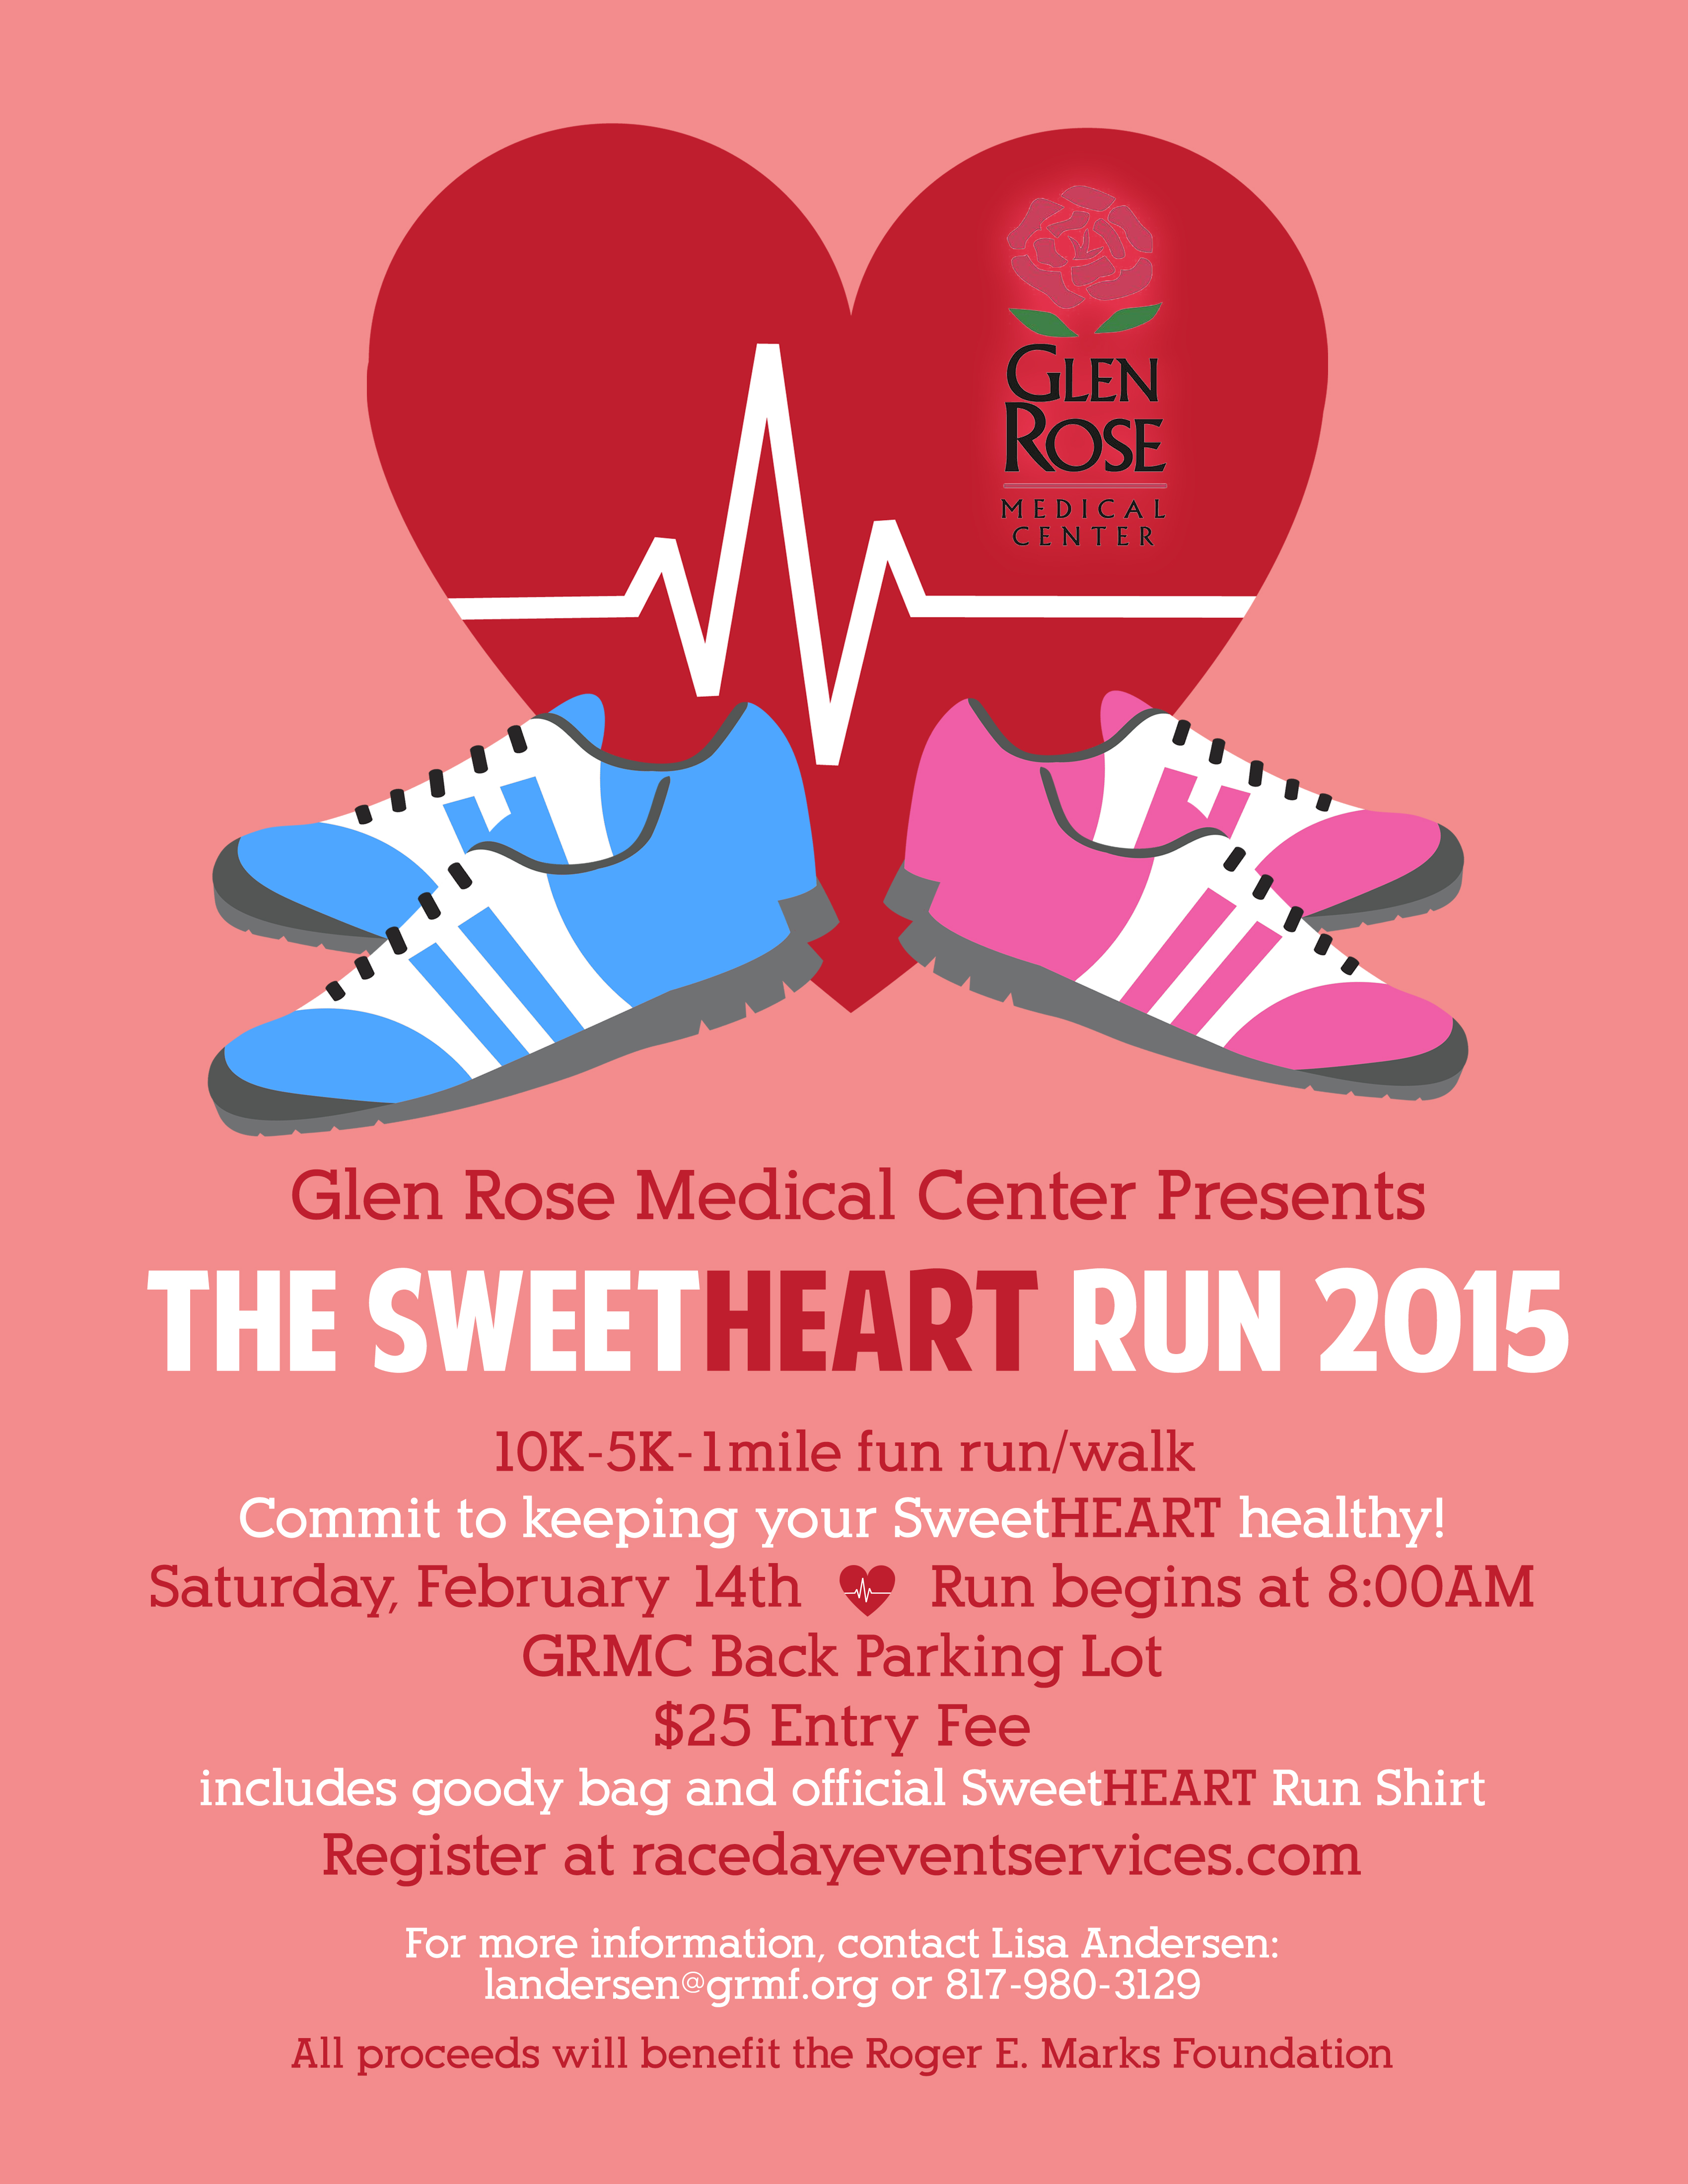 SweetHEART Run/Walk | Glen Rose Medical Center